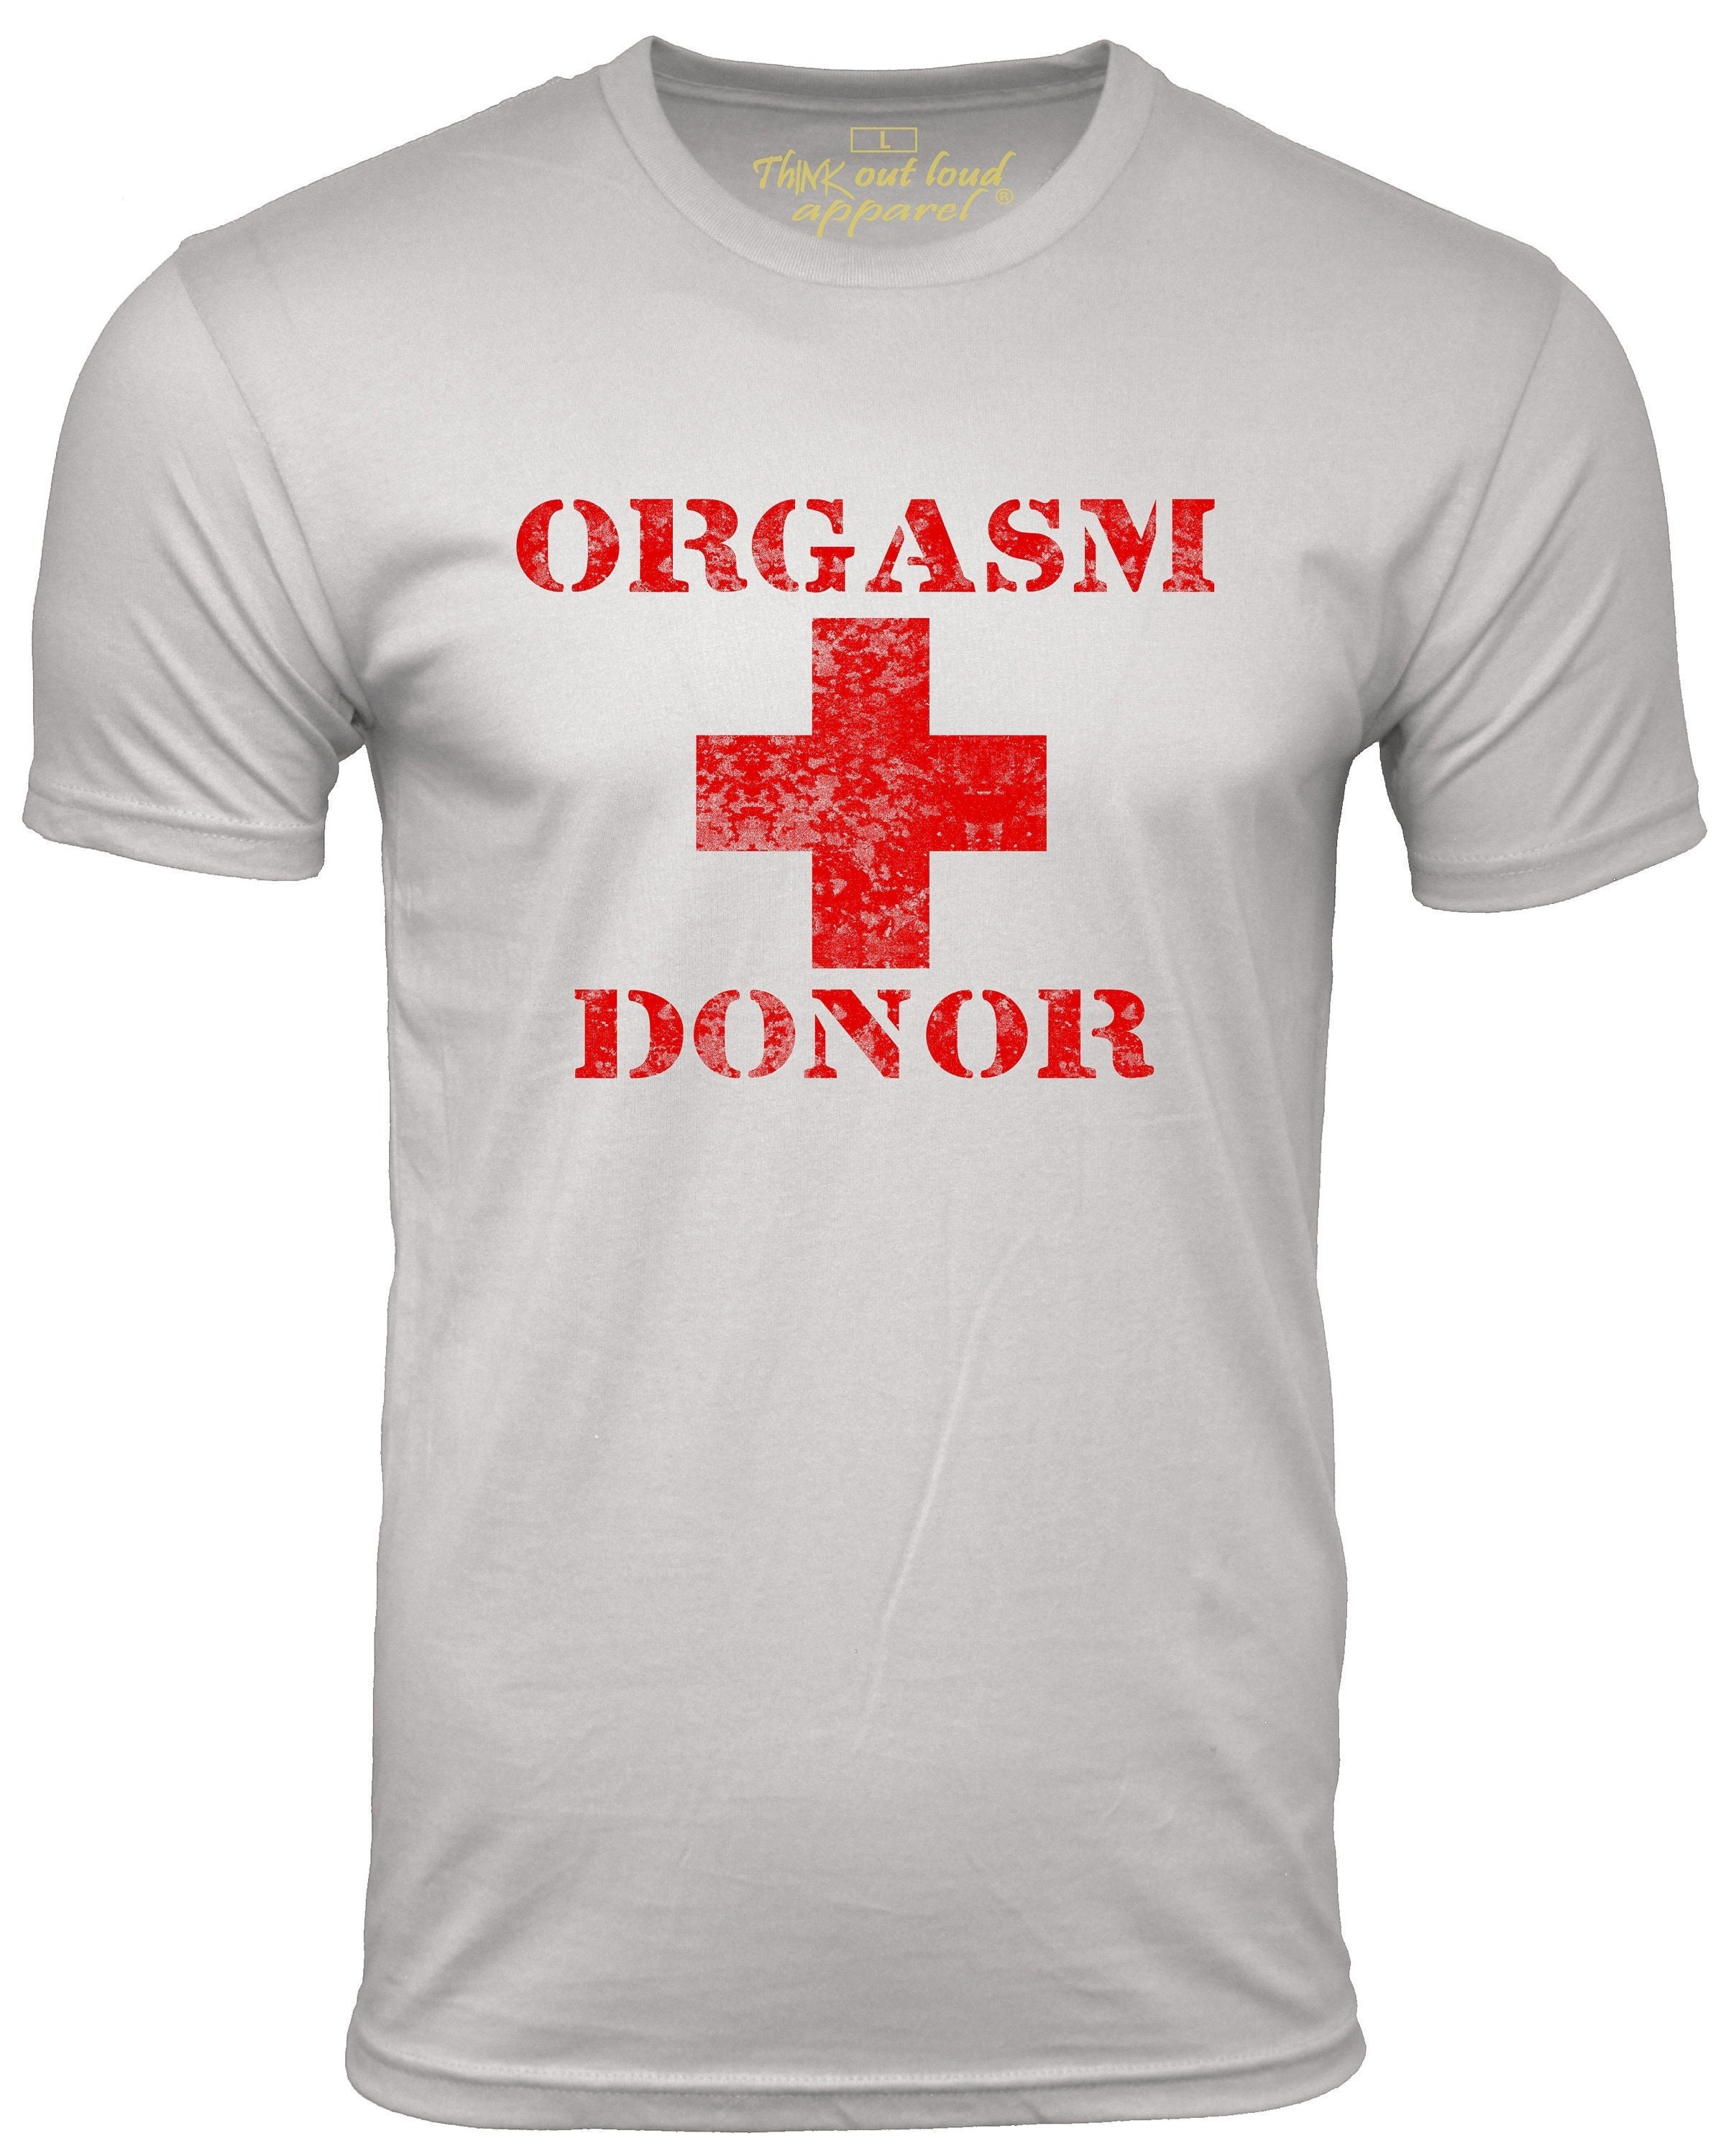 Orgasm Donor Funny T-shirt Humor photo